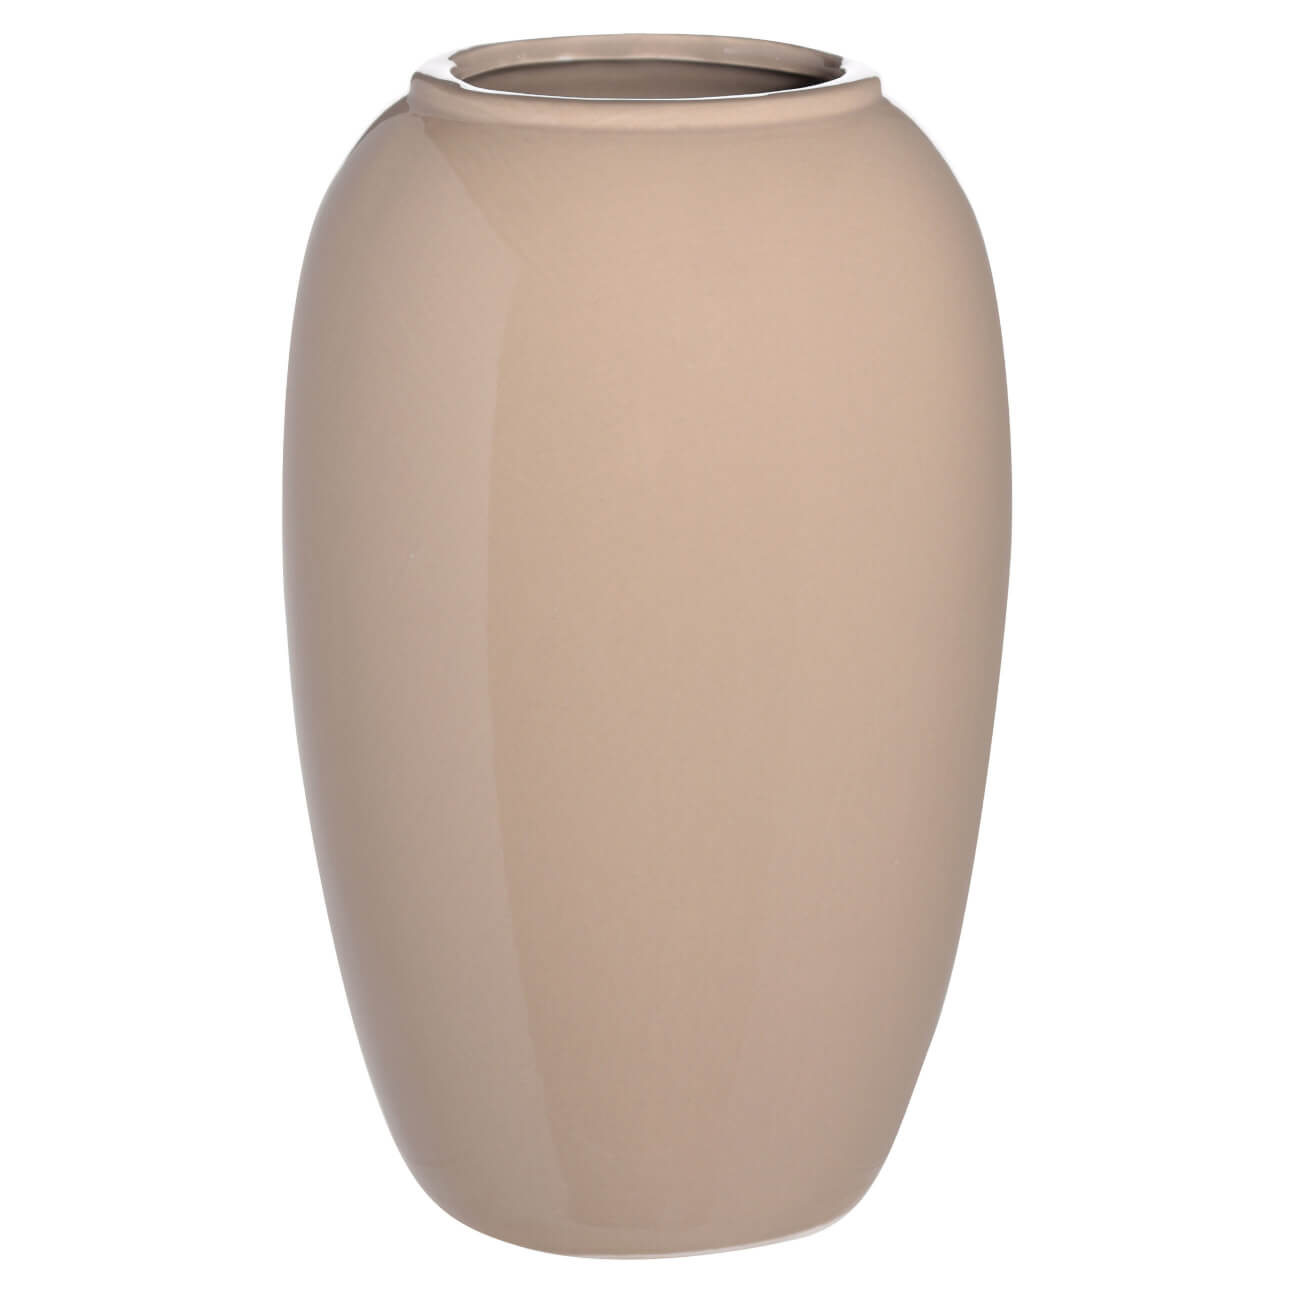 Flower vase, 24 cm, ceramic, beige-brown, Tiara изображение № 1